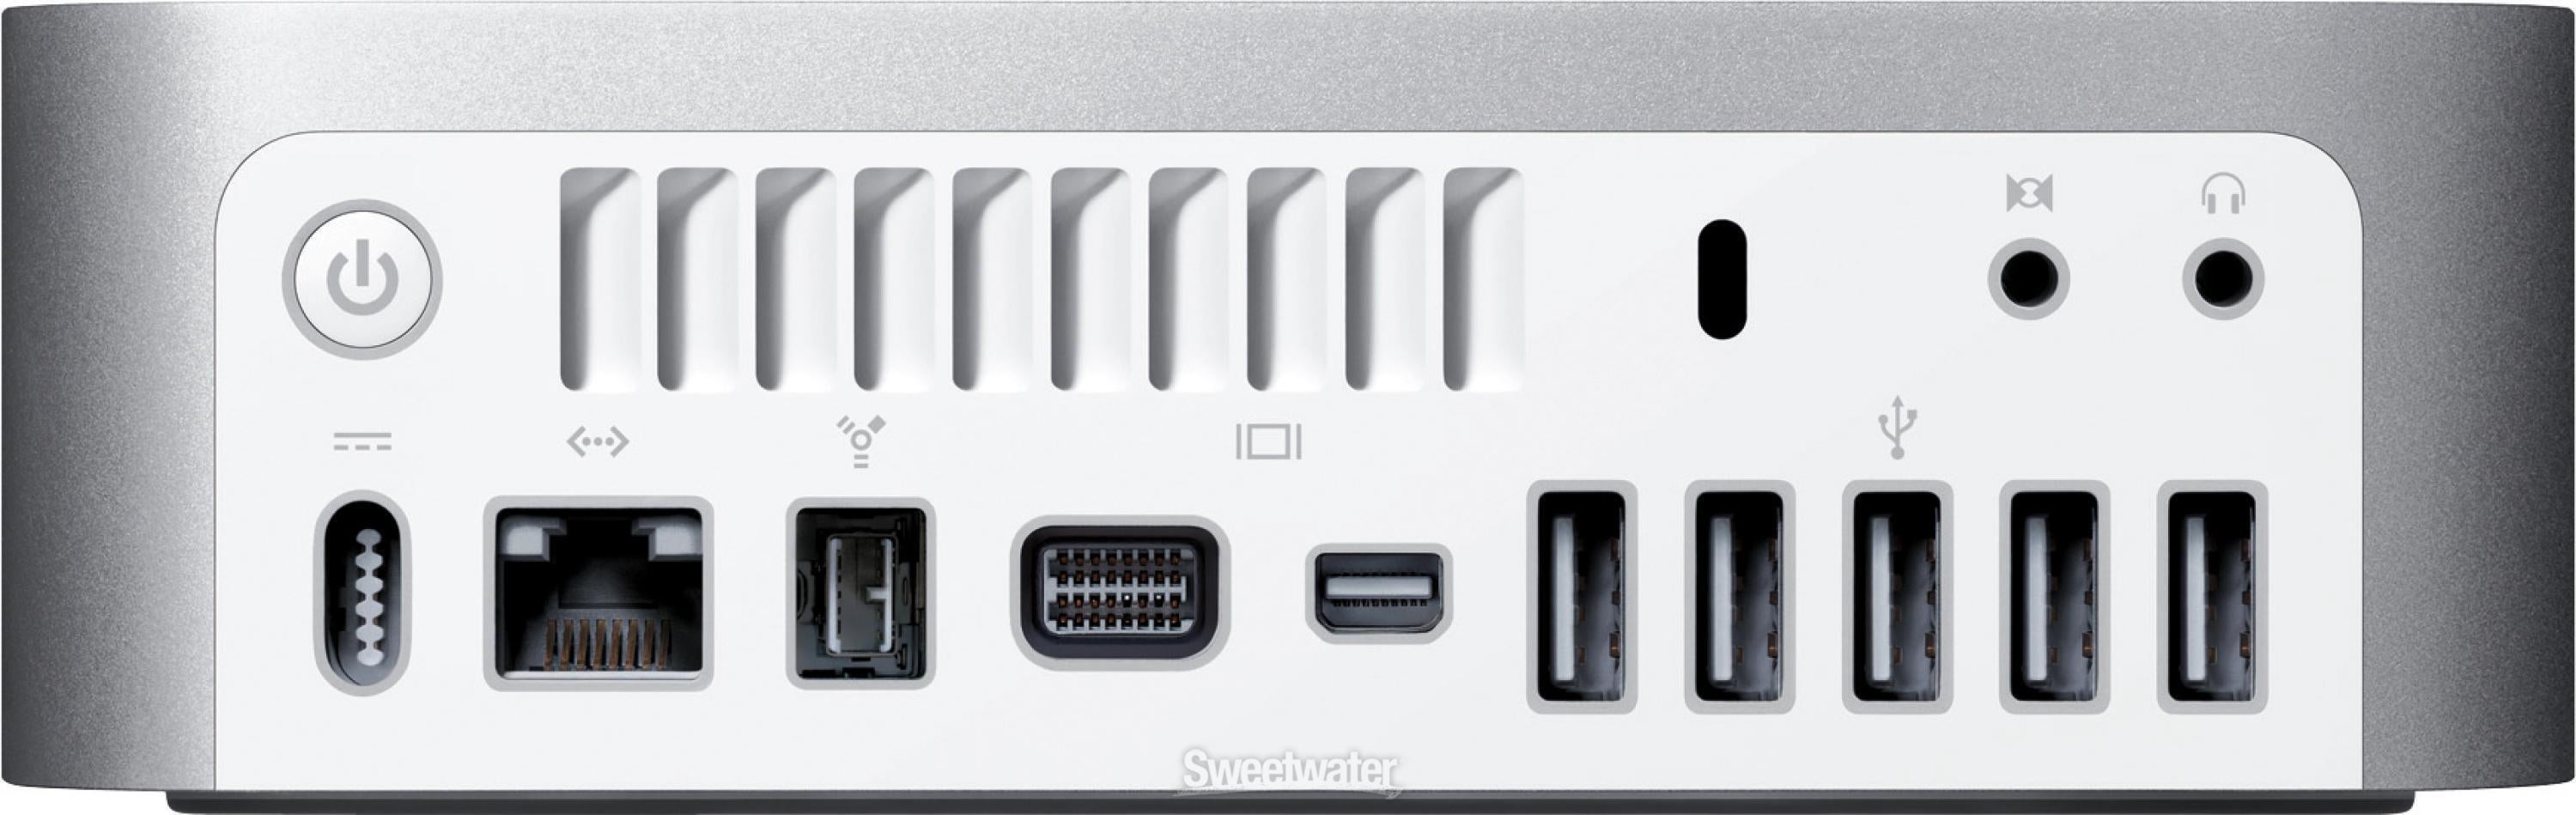 Apple Mac mini - 2.53GHz | Sweetwater